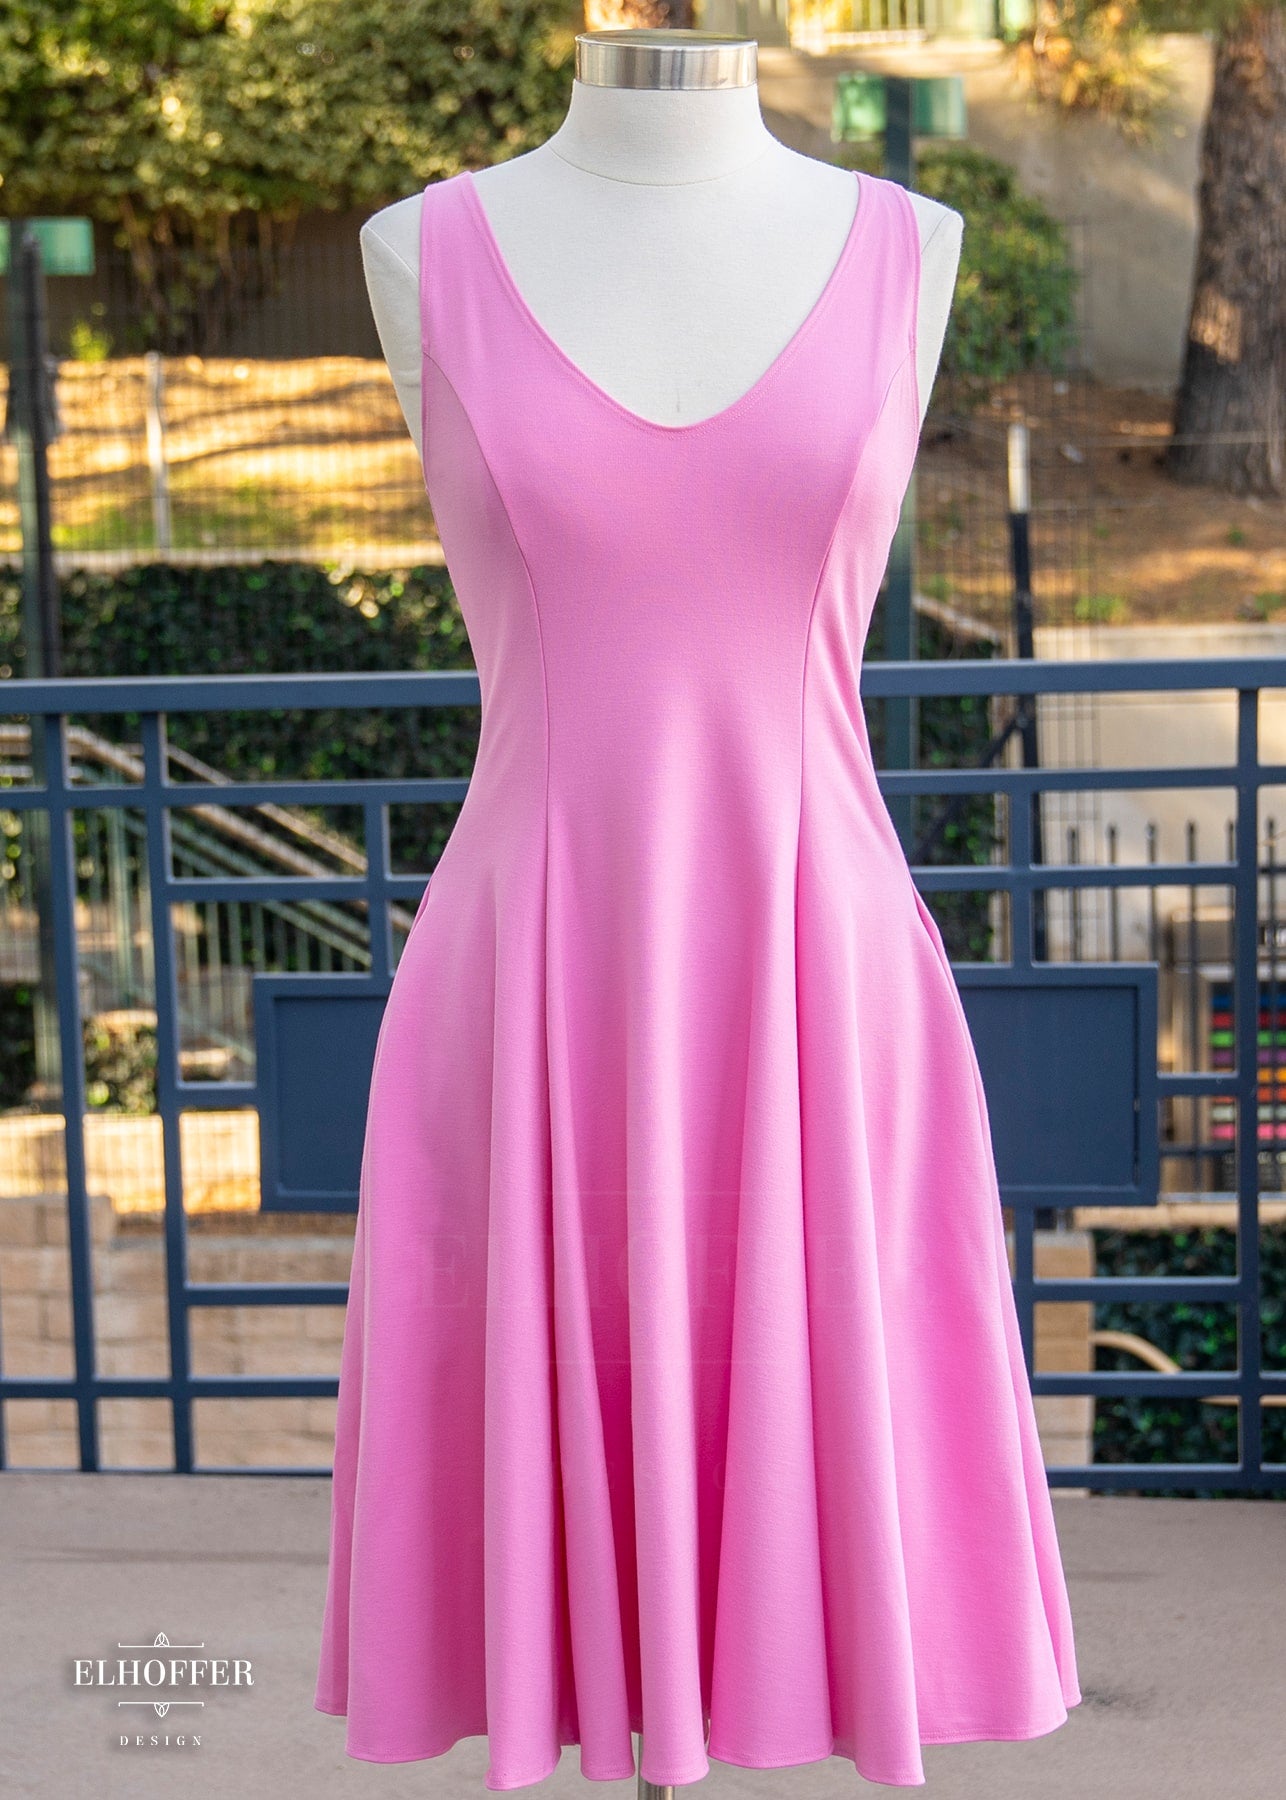 Starpuff Special - Essential Virgo Dress - Rose Pink Ponte